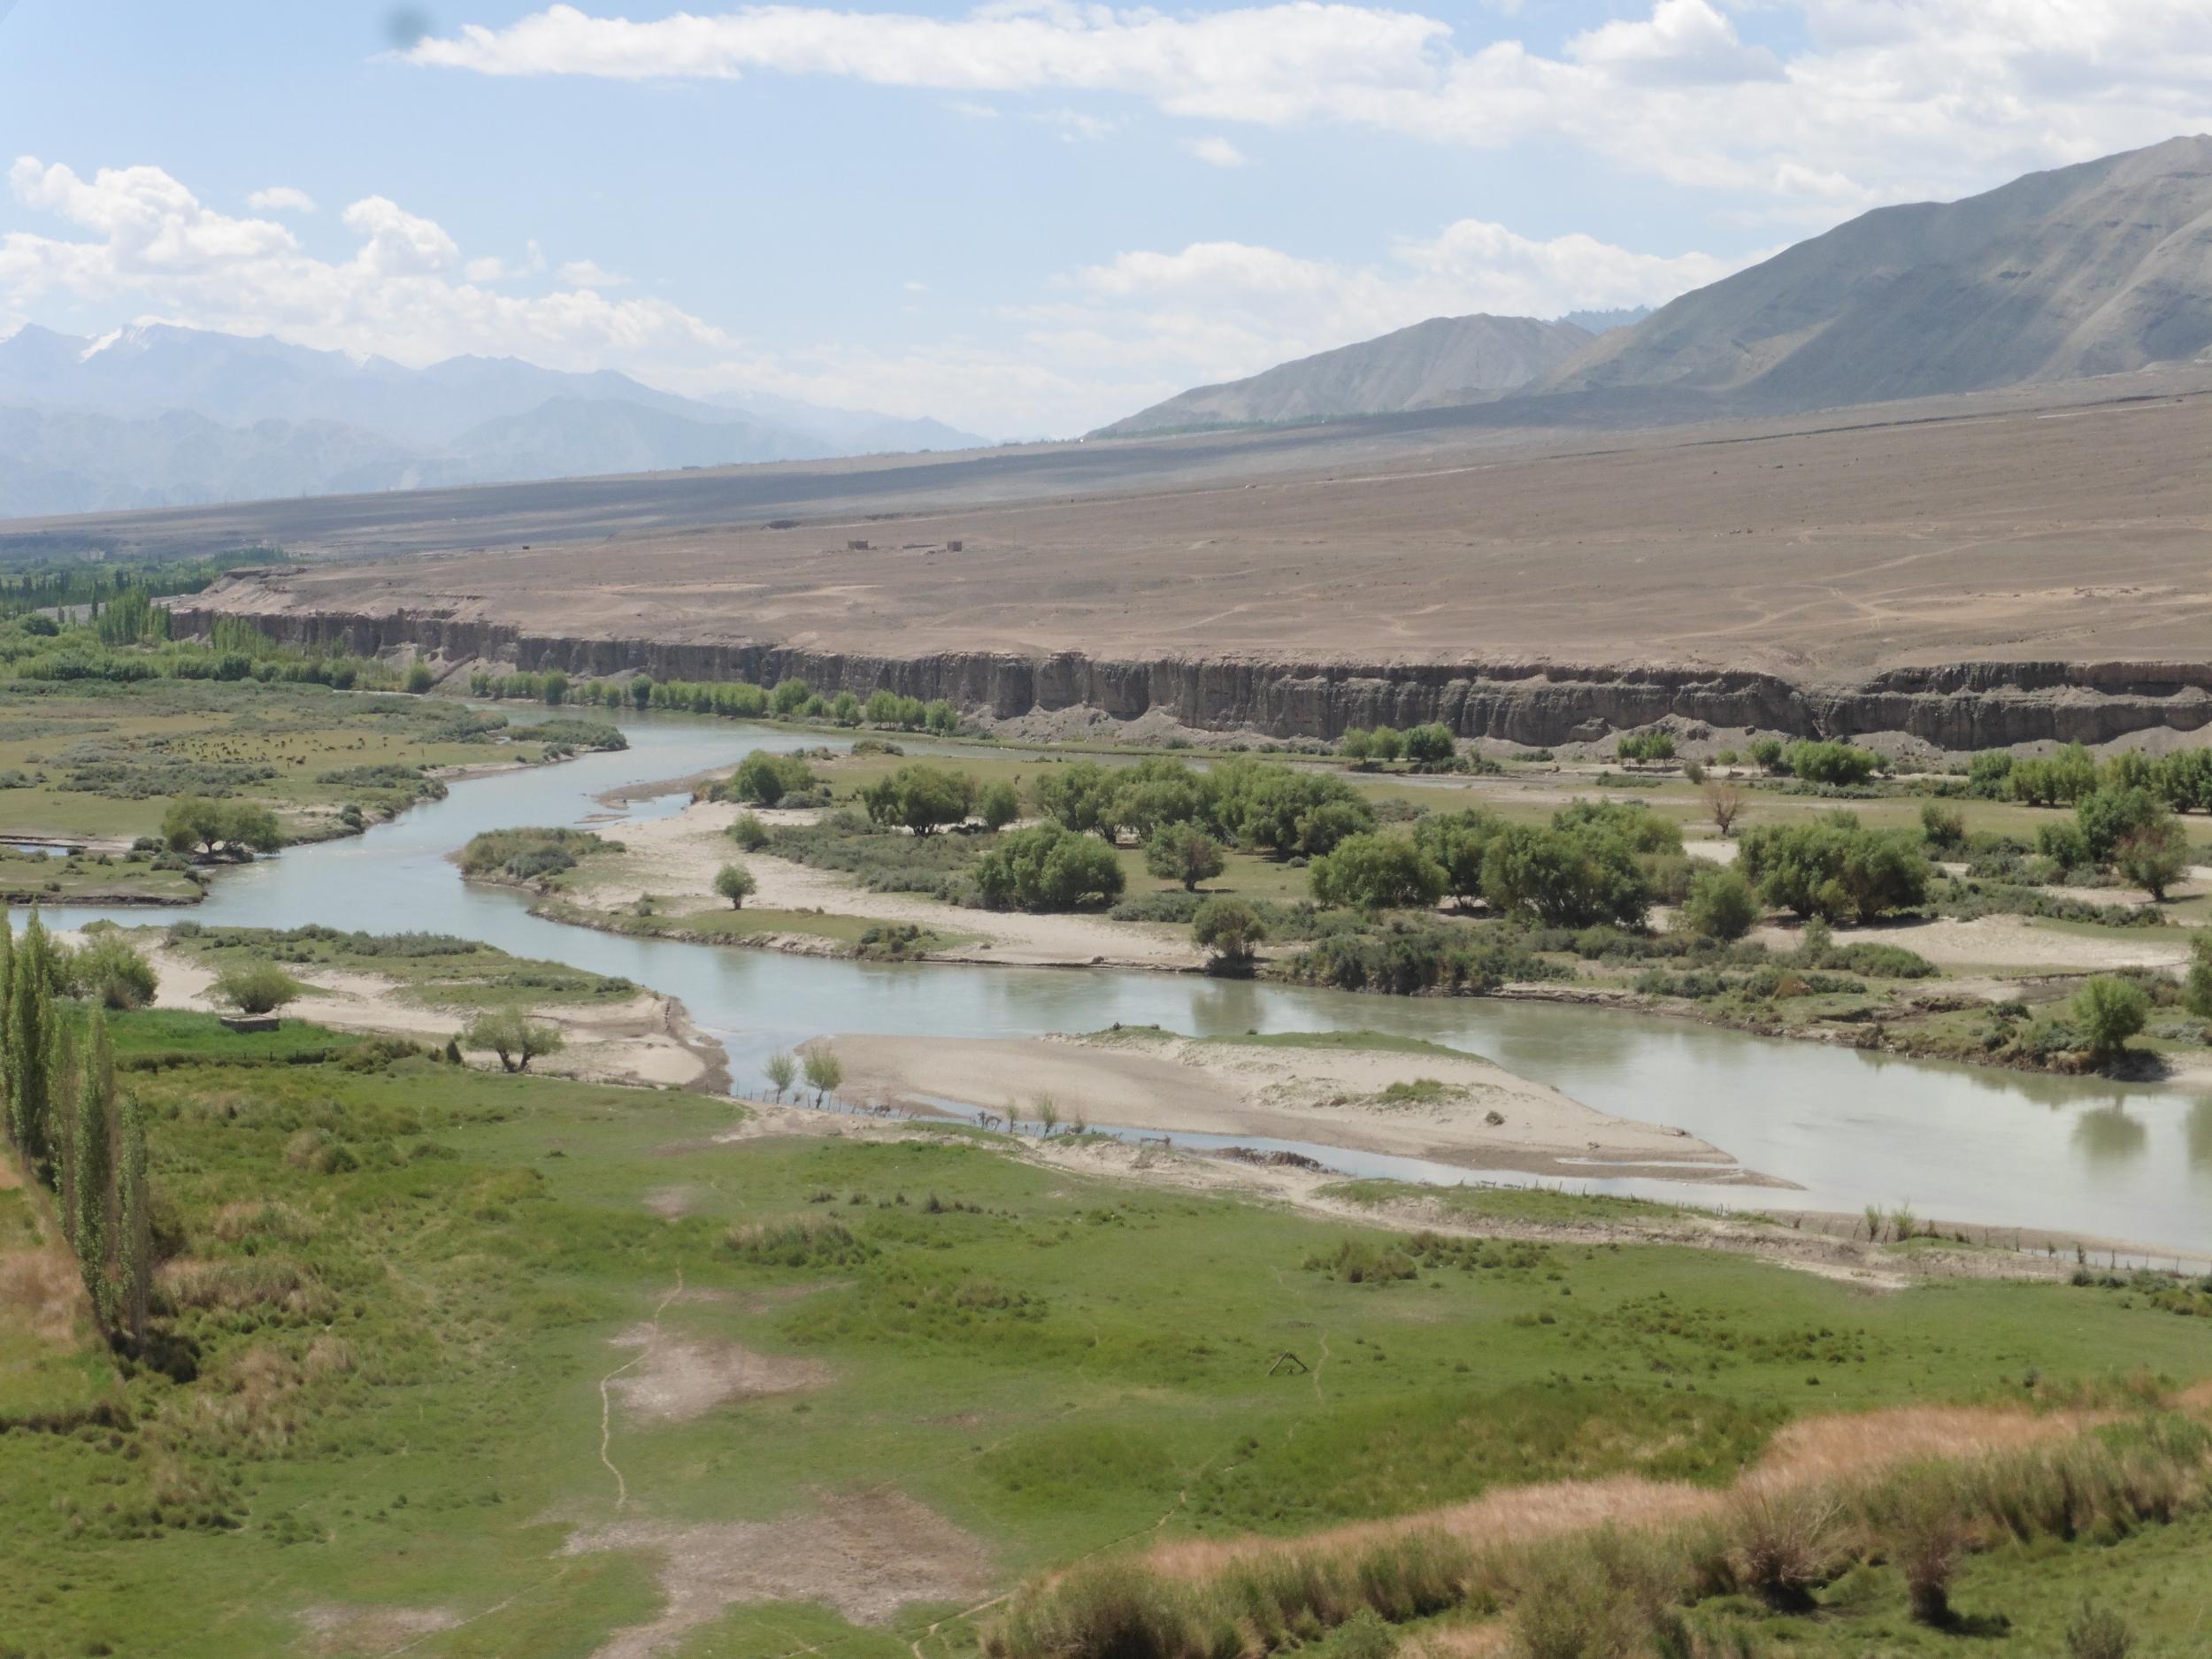 The Zanskar river brings life